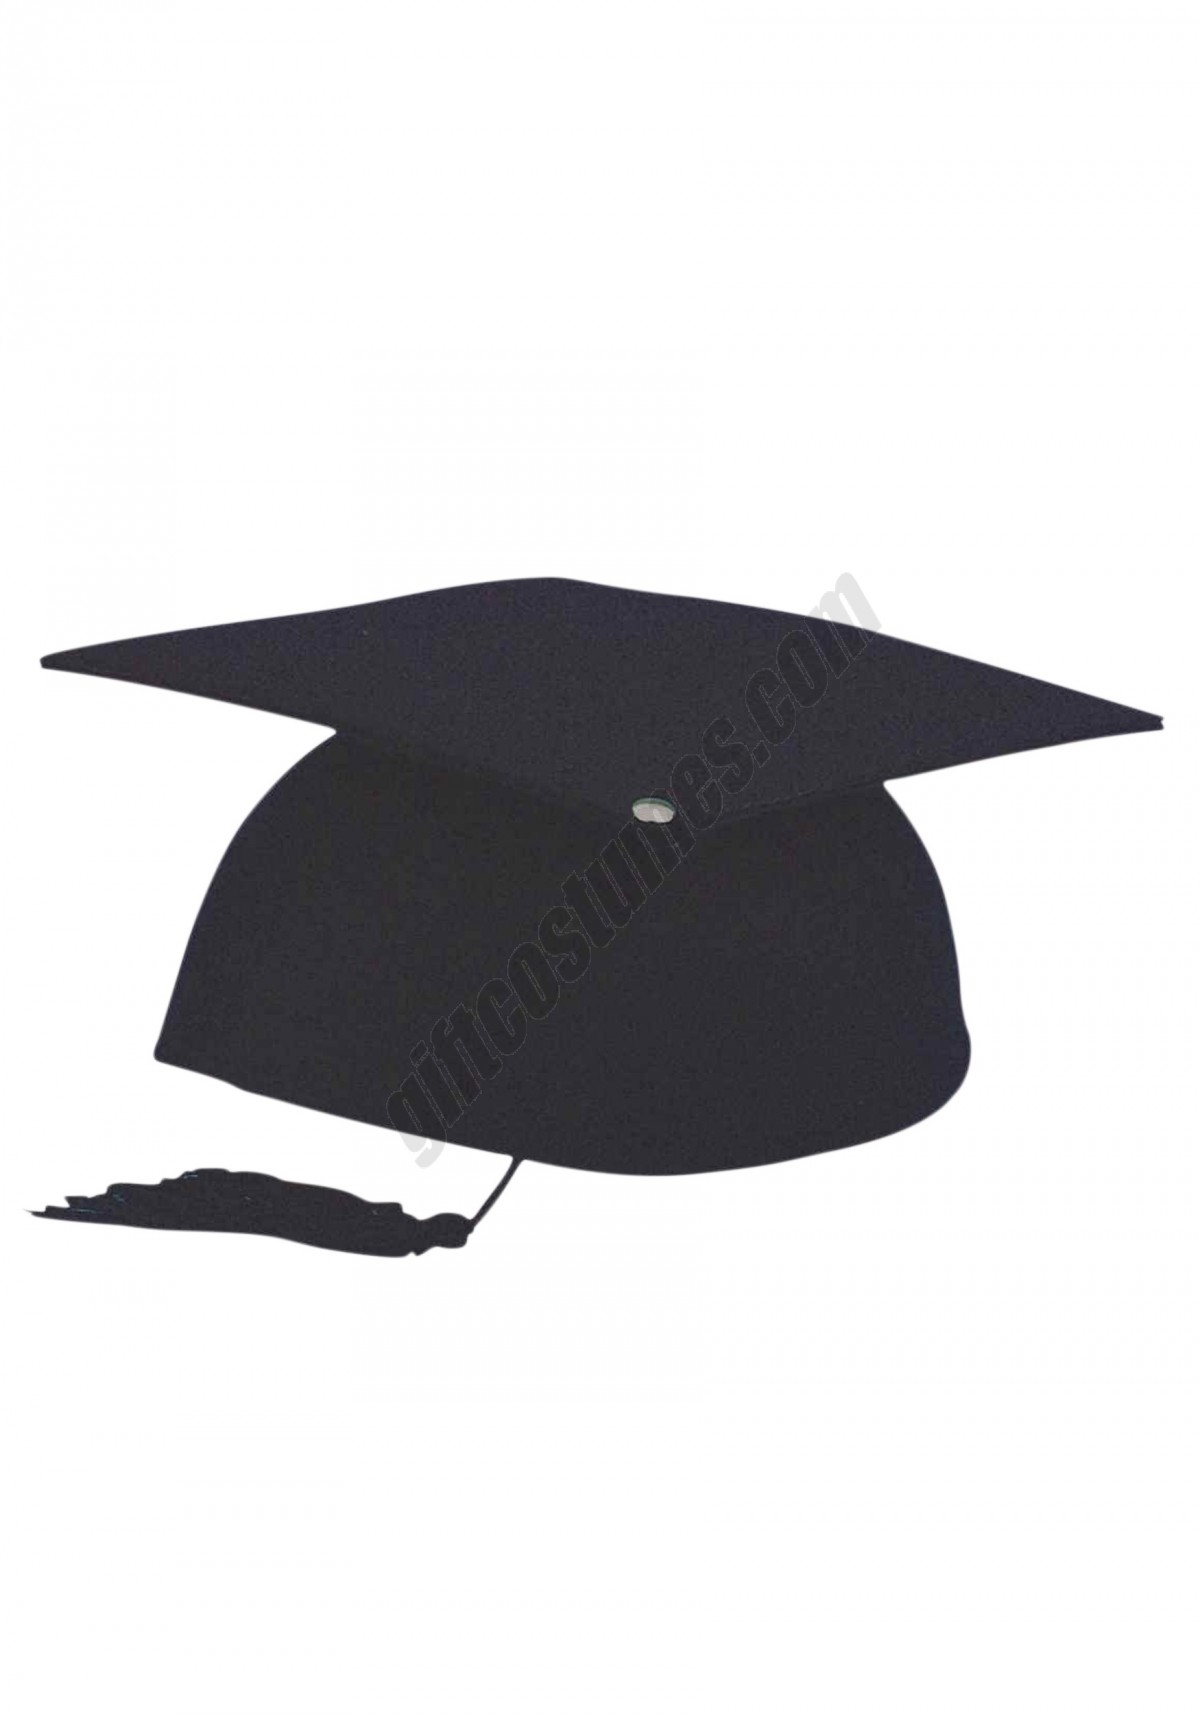 Black Graduation Cap Promotions - -0